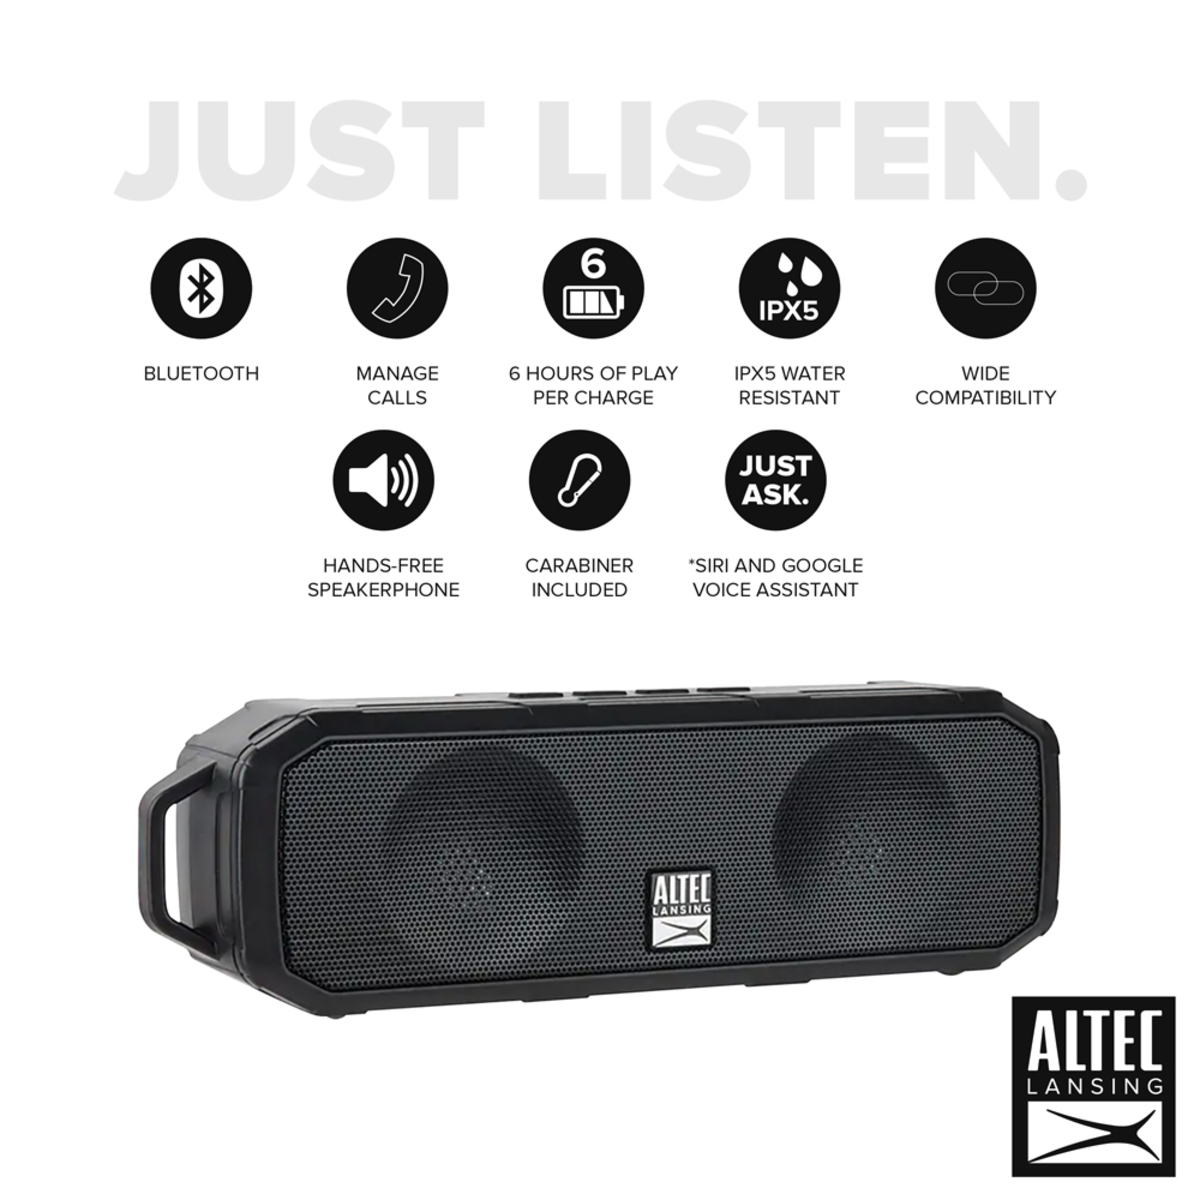 Altec Lansing Fury Wireless Bluetooth Speaker W340N Black